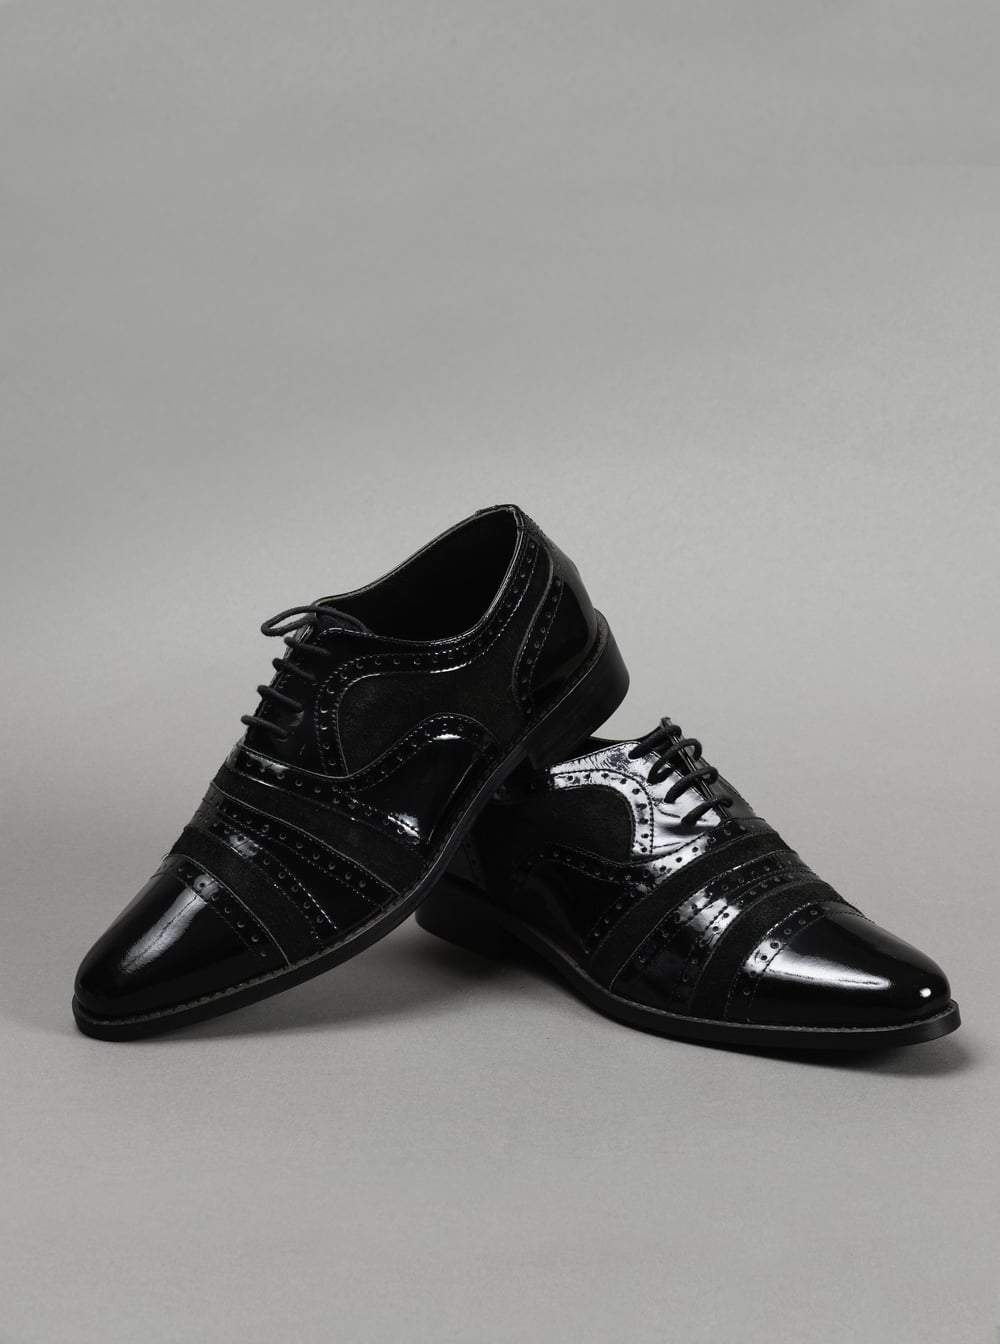 Black Patent Leather Bespoke Shoe